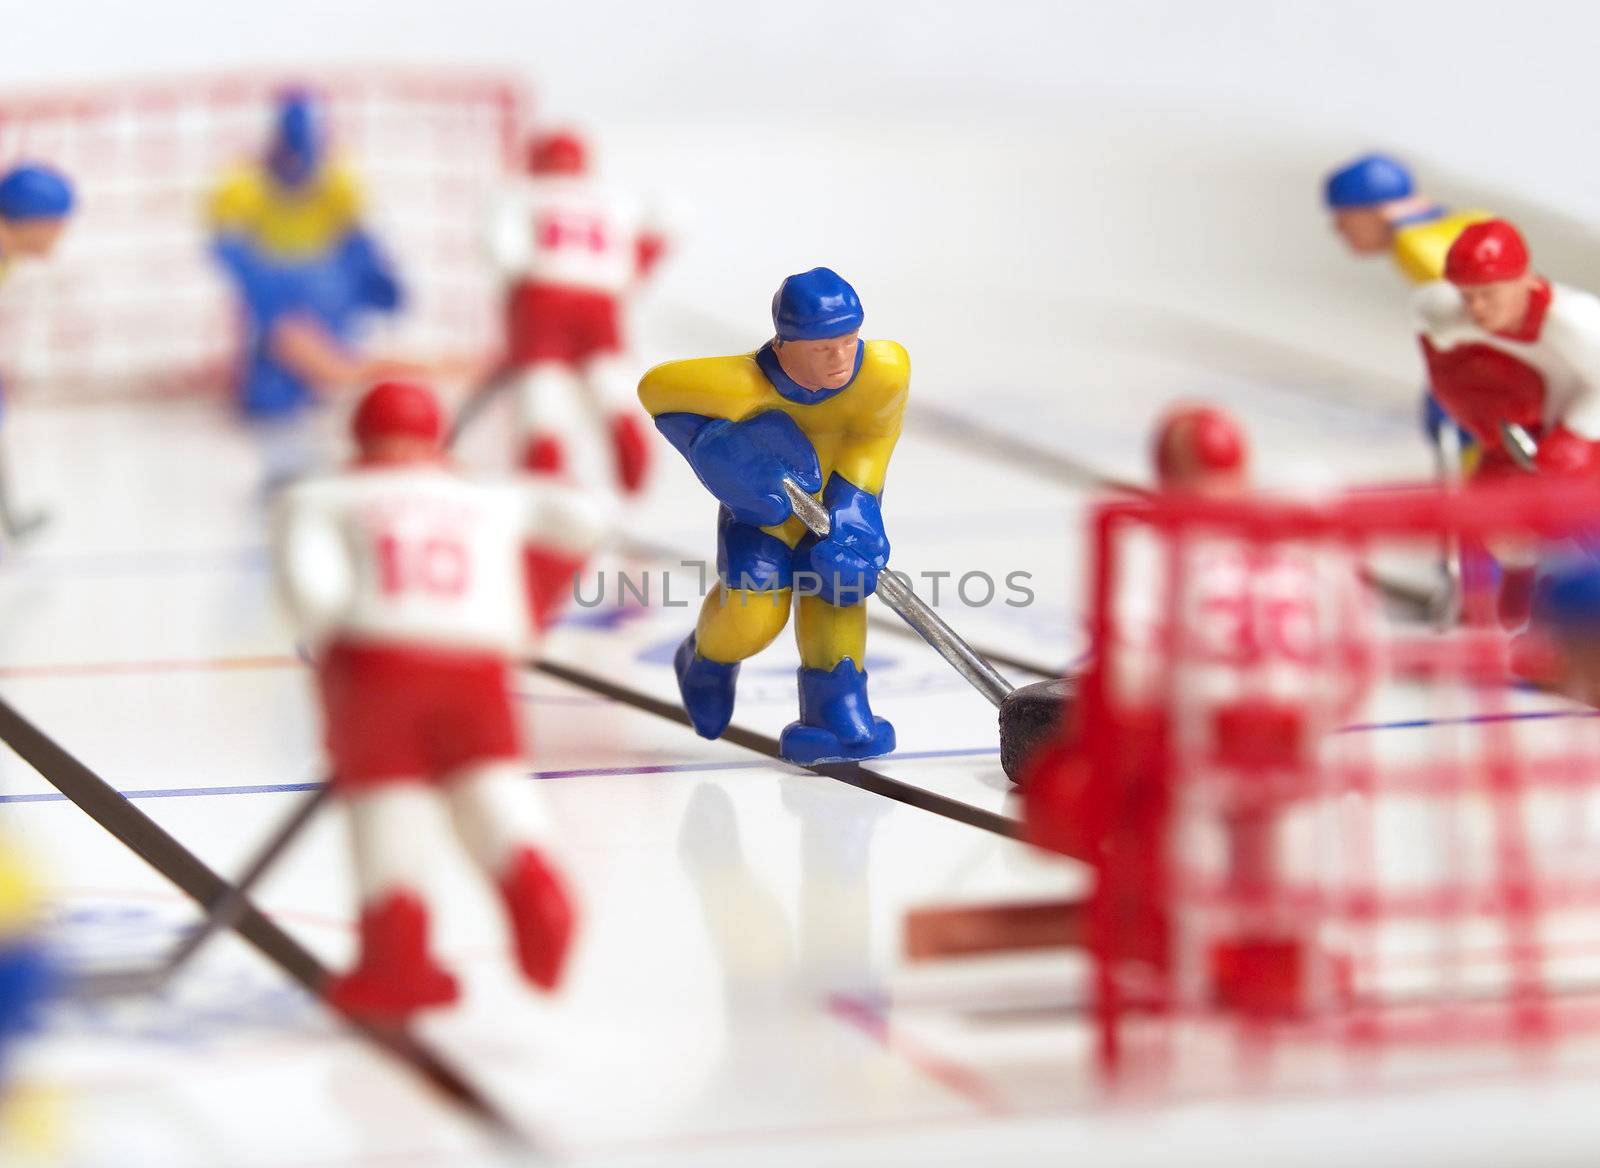 Hockey Toy by gemenacom